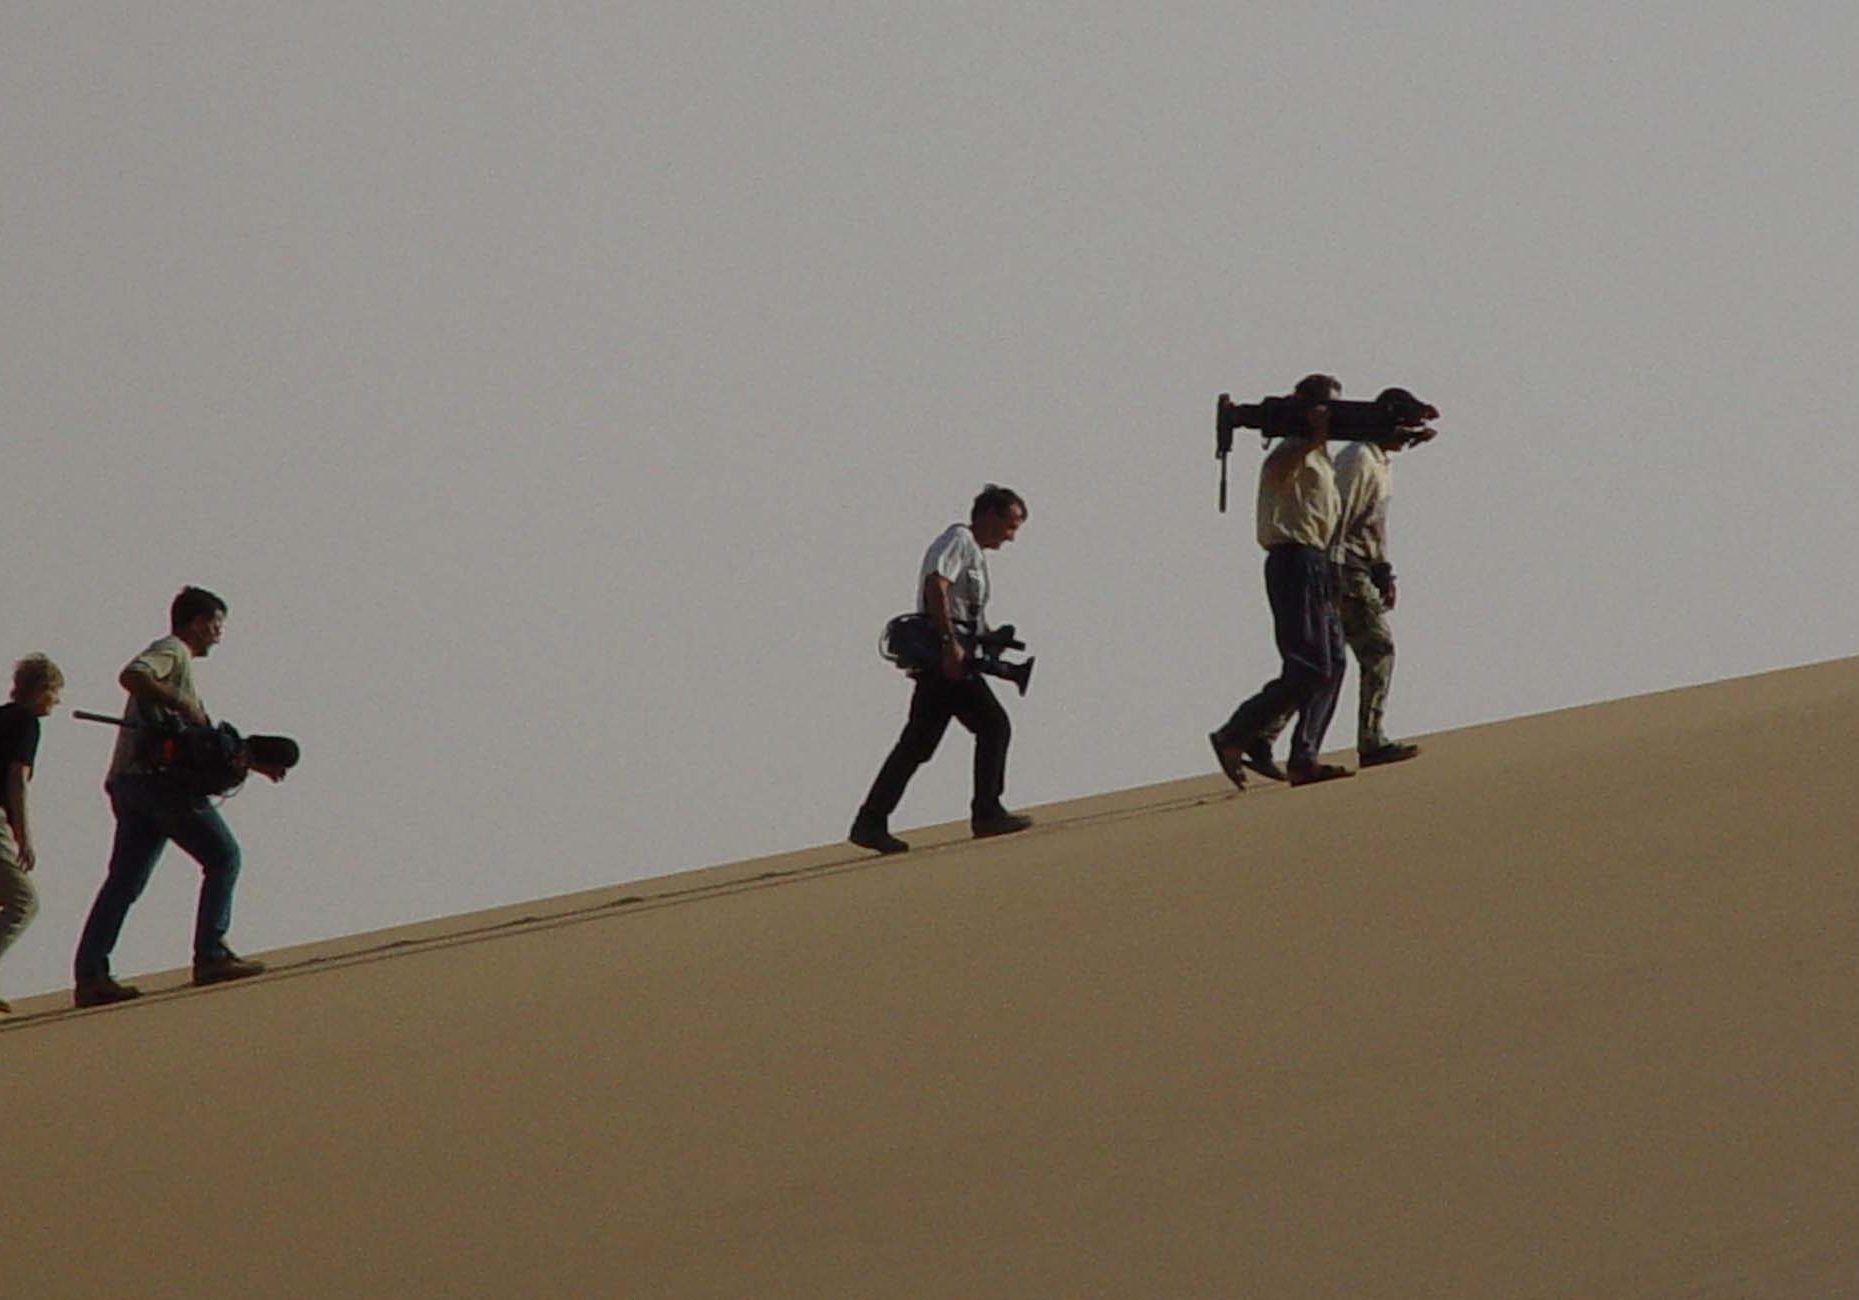 Film crew carrying equipment over sand dune